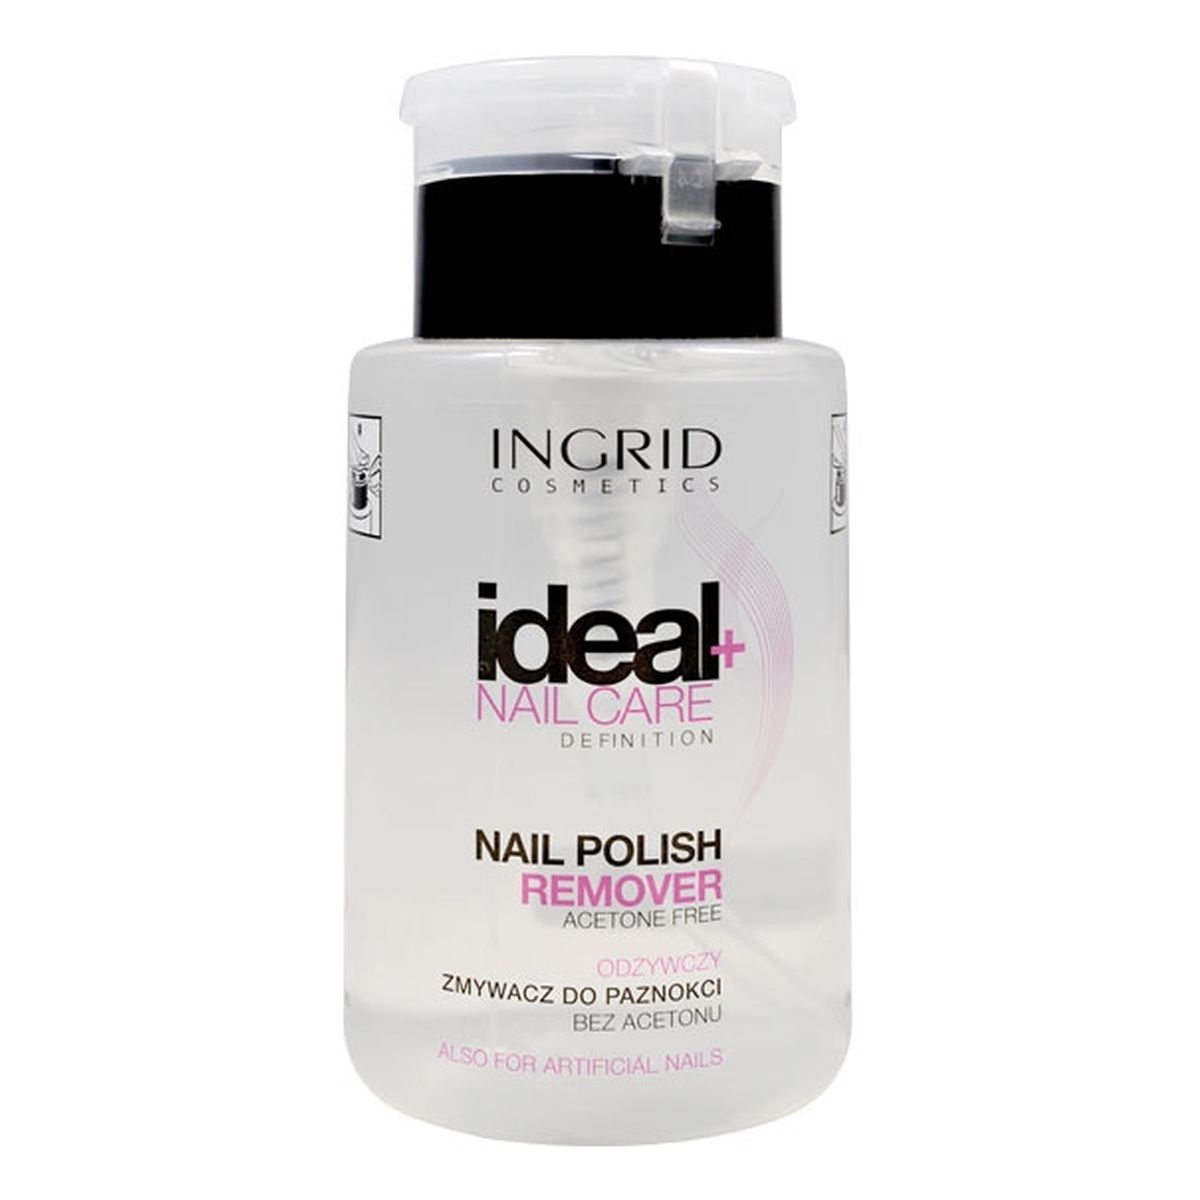 Ingrid Ideal Nail Care Definition Zmywacz Do Paznokci 150ml